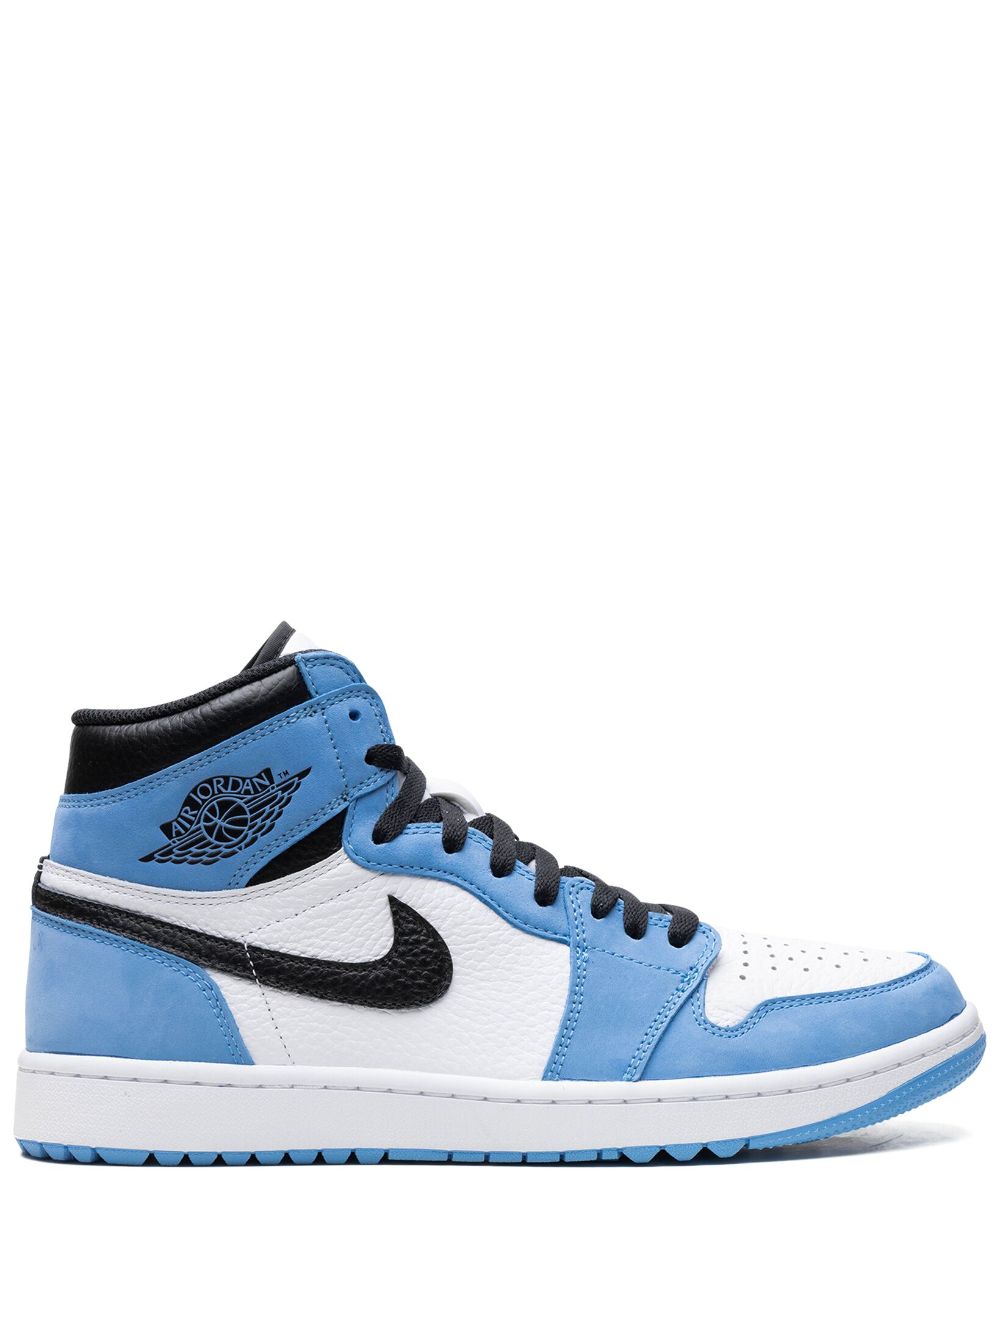 Air Jordan 1 High Golf "University Blue" sneakers